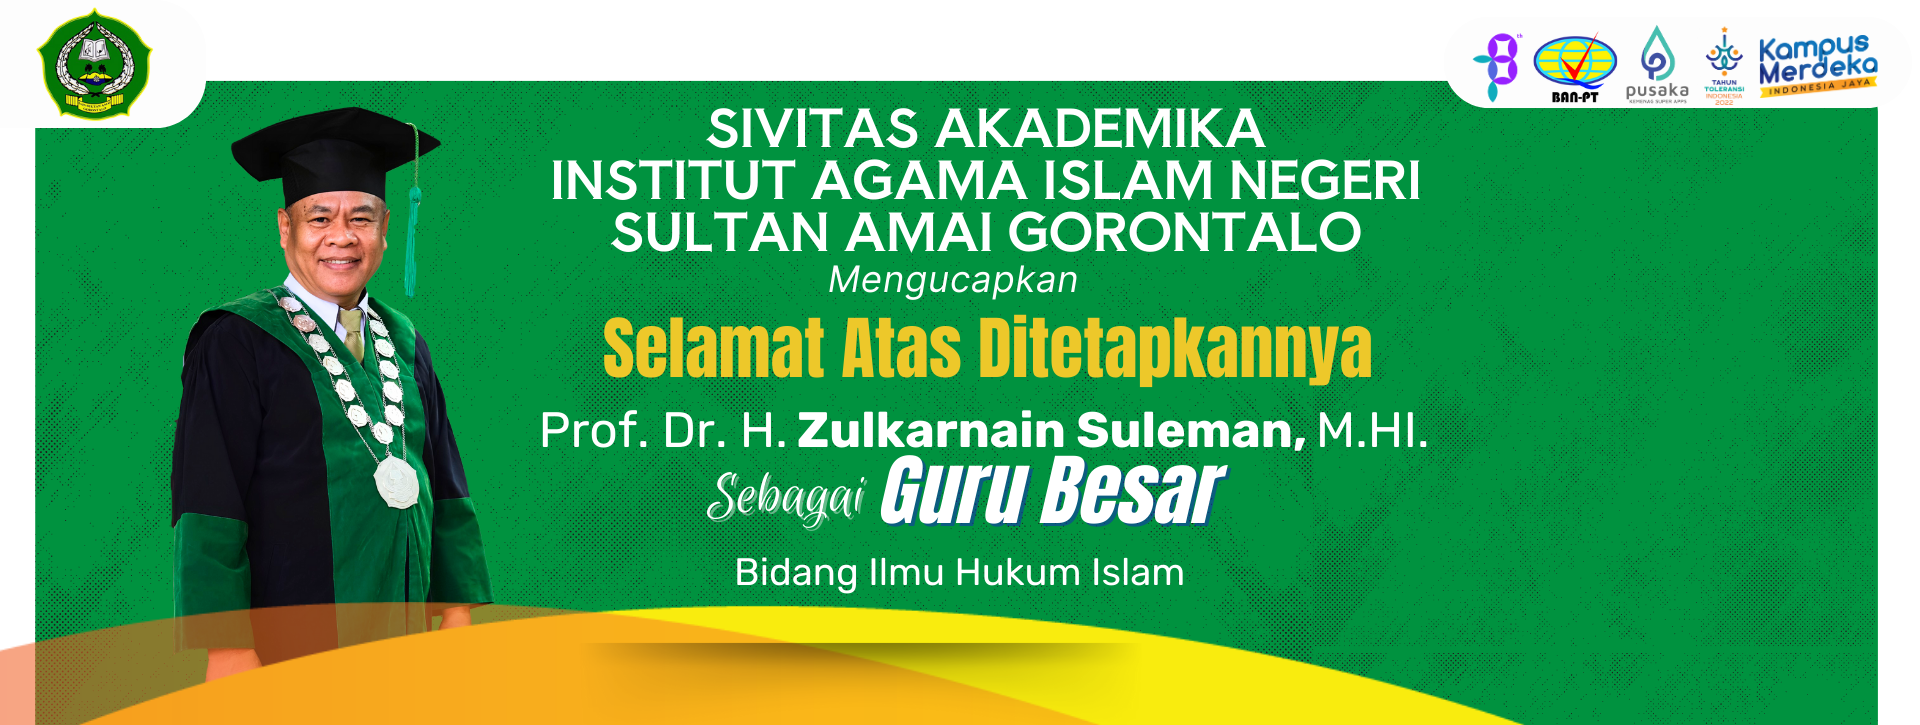 GB. Prof. Dr. H. Zulkarnain Suleman, M.HI.